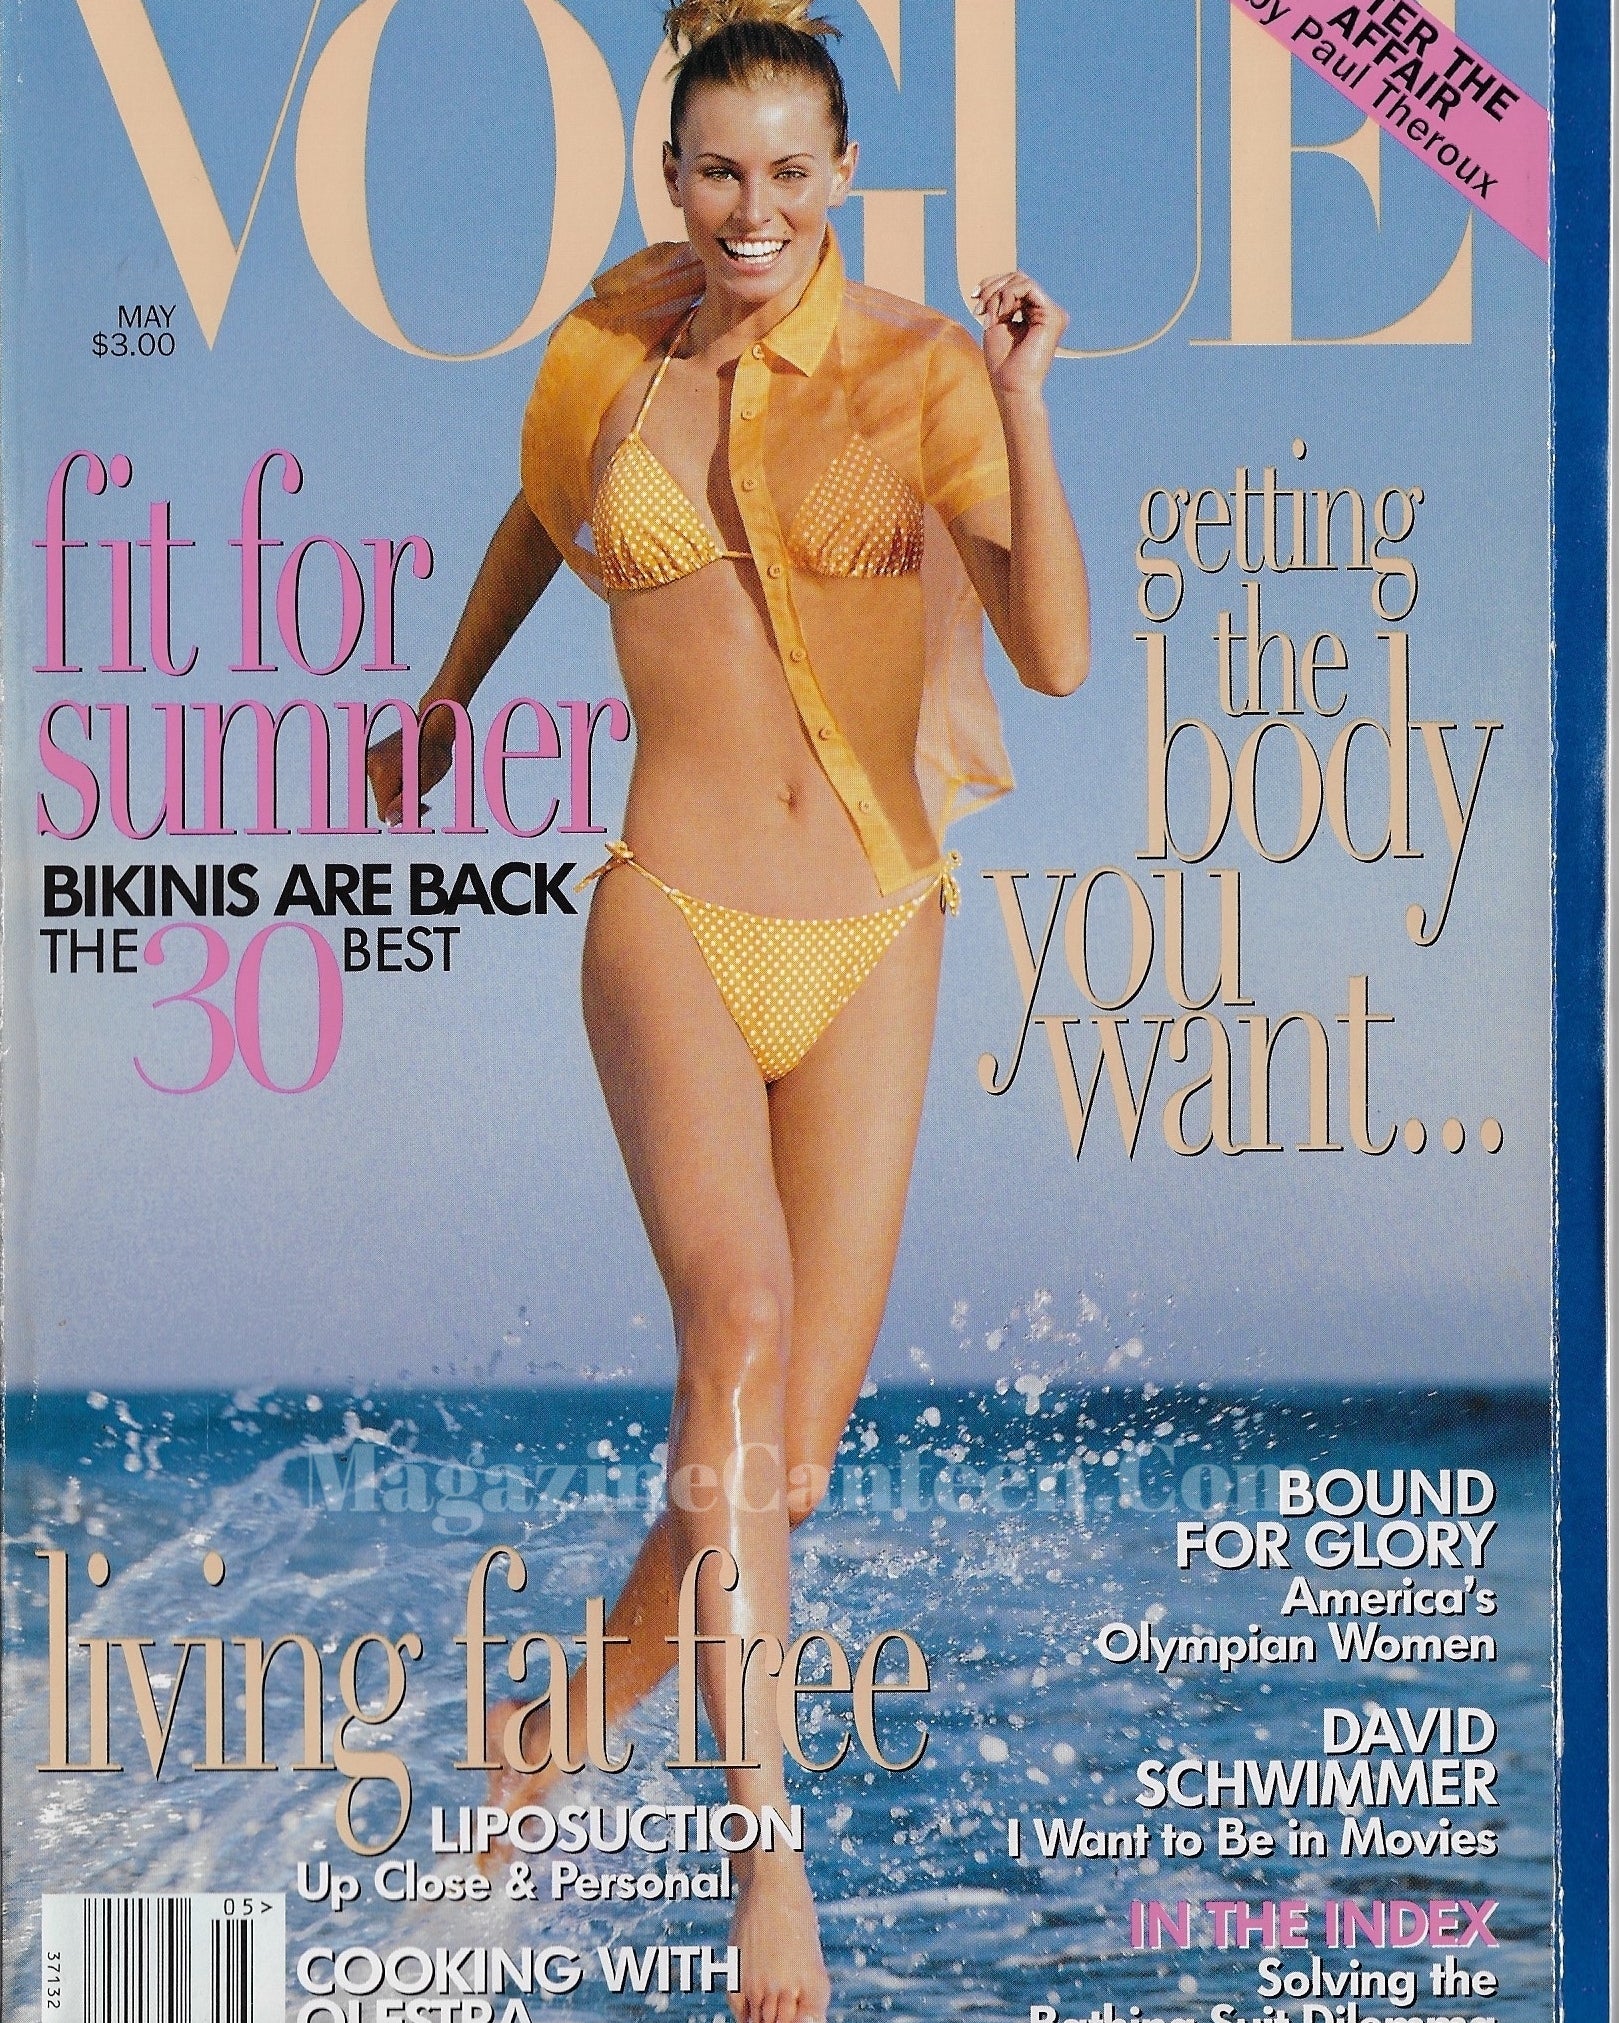 Vogue USA Magazine May 1996 - Niki Taylor